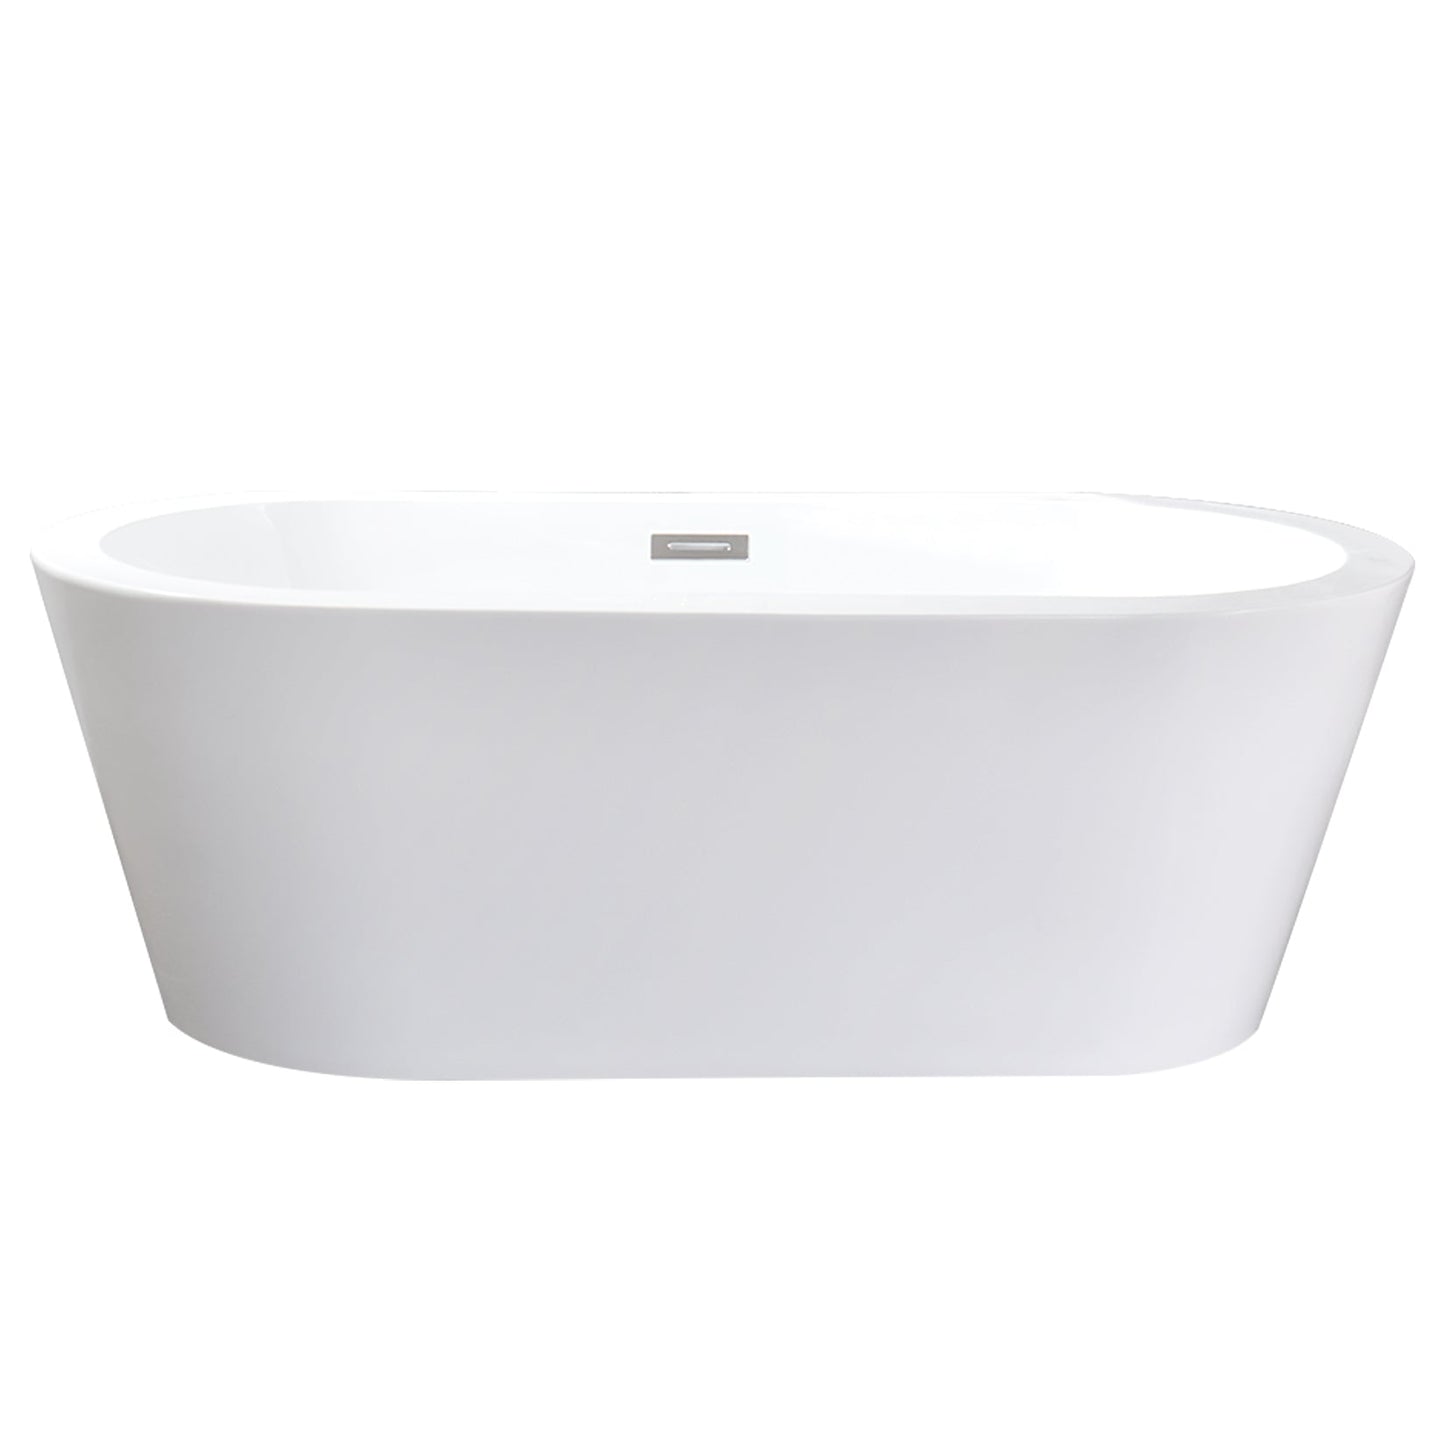 Bell + Modern Bathtubs and Tub Fillers Telluride 59 in White Freestanding Acrylic Flatbottom Soaking Bathtub